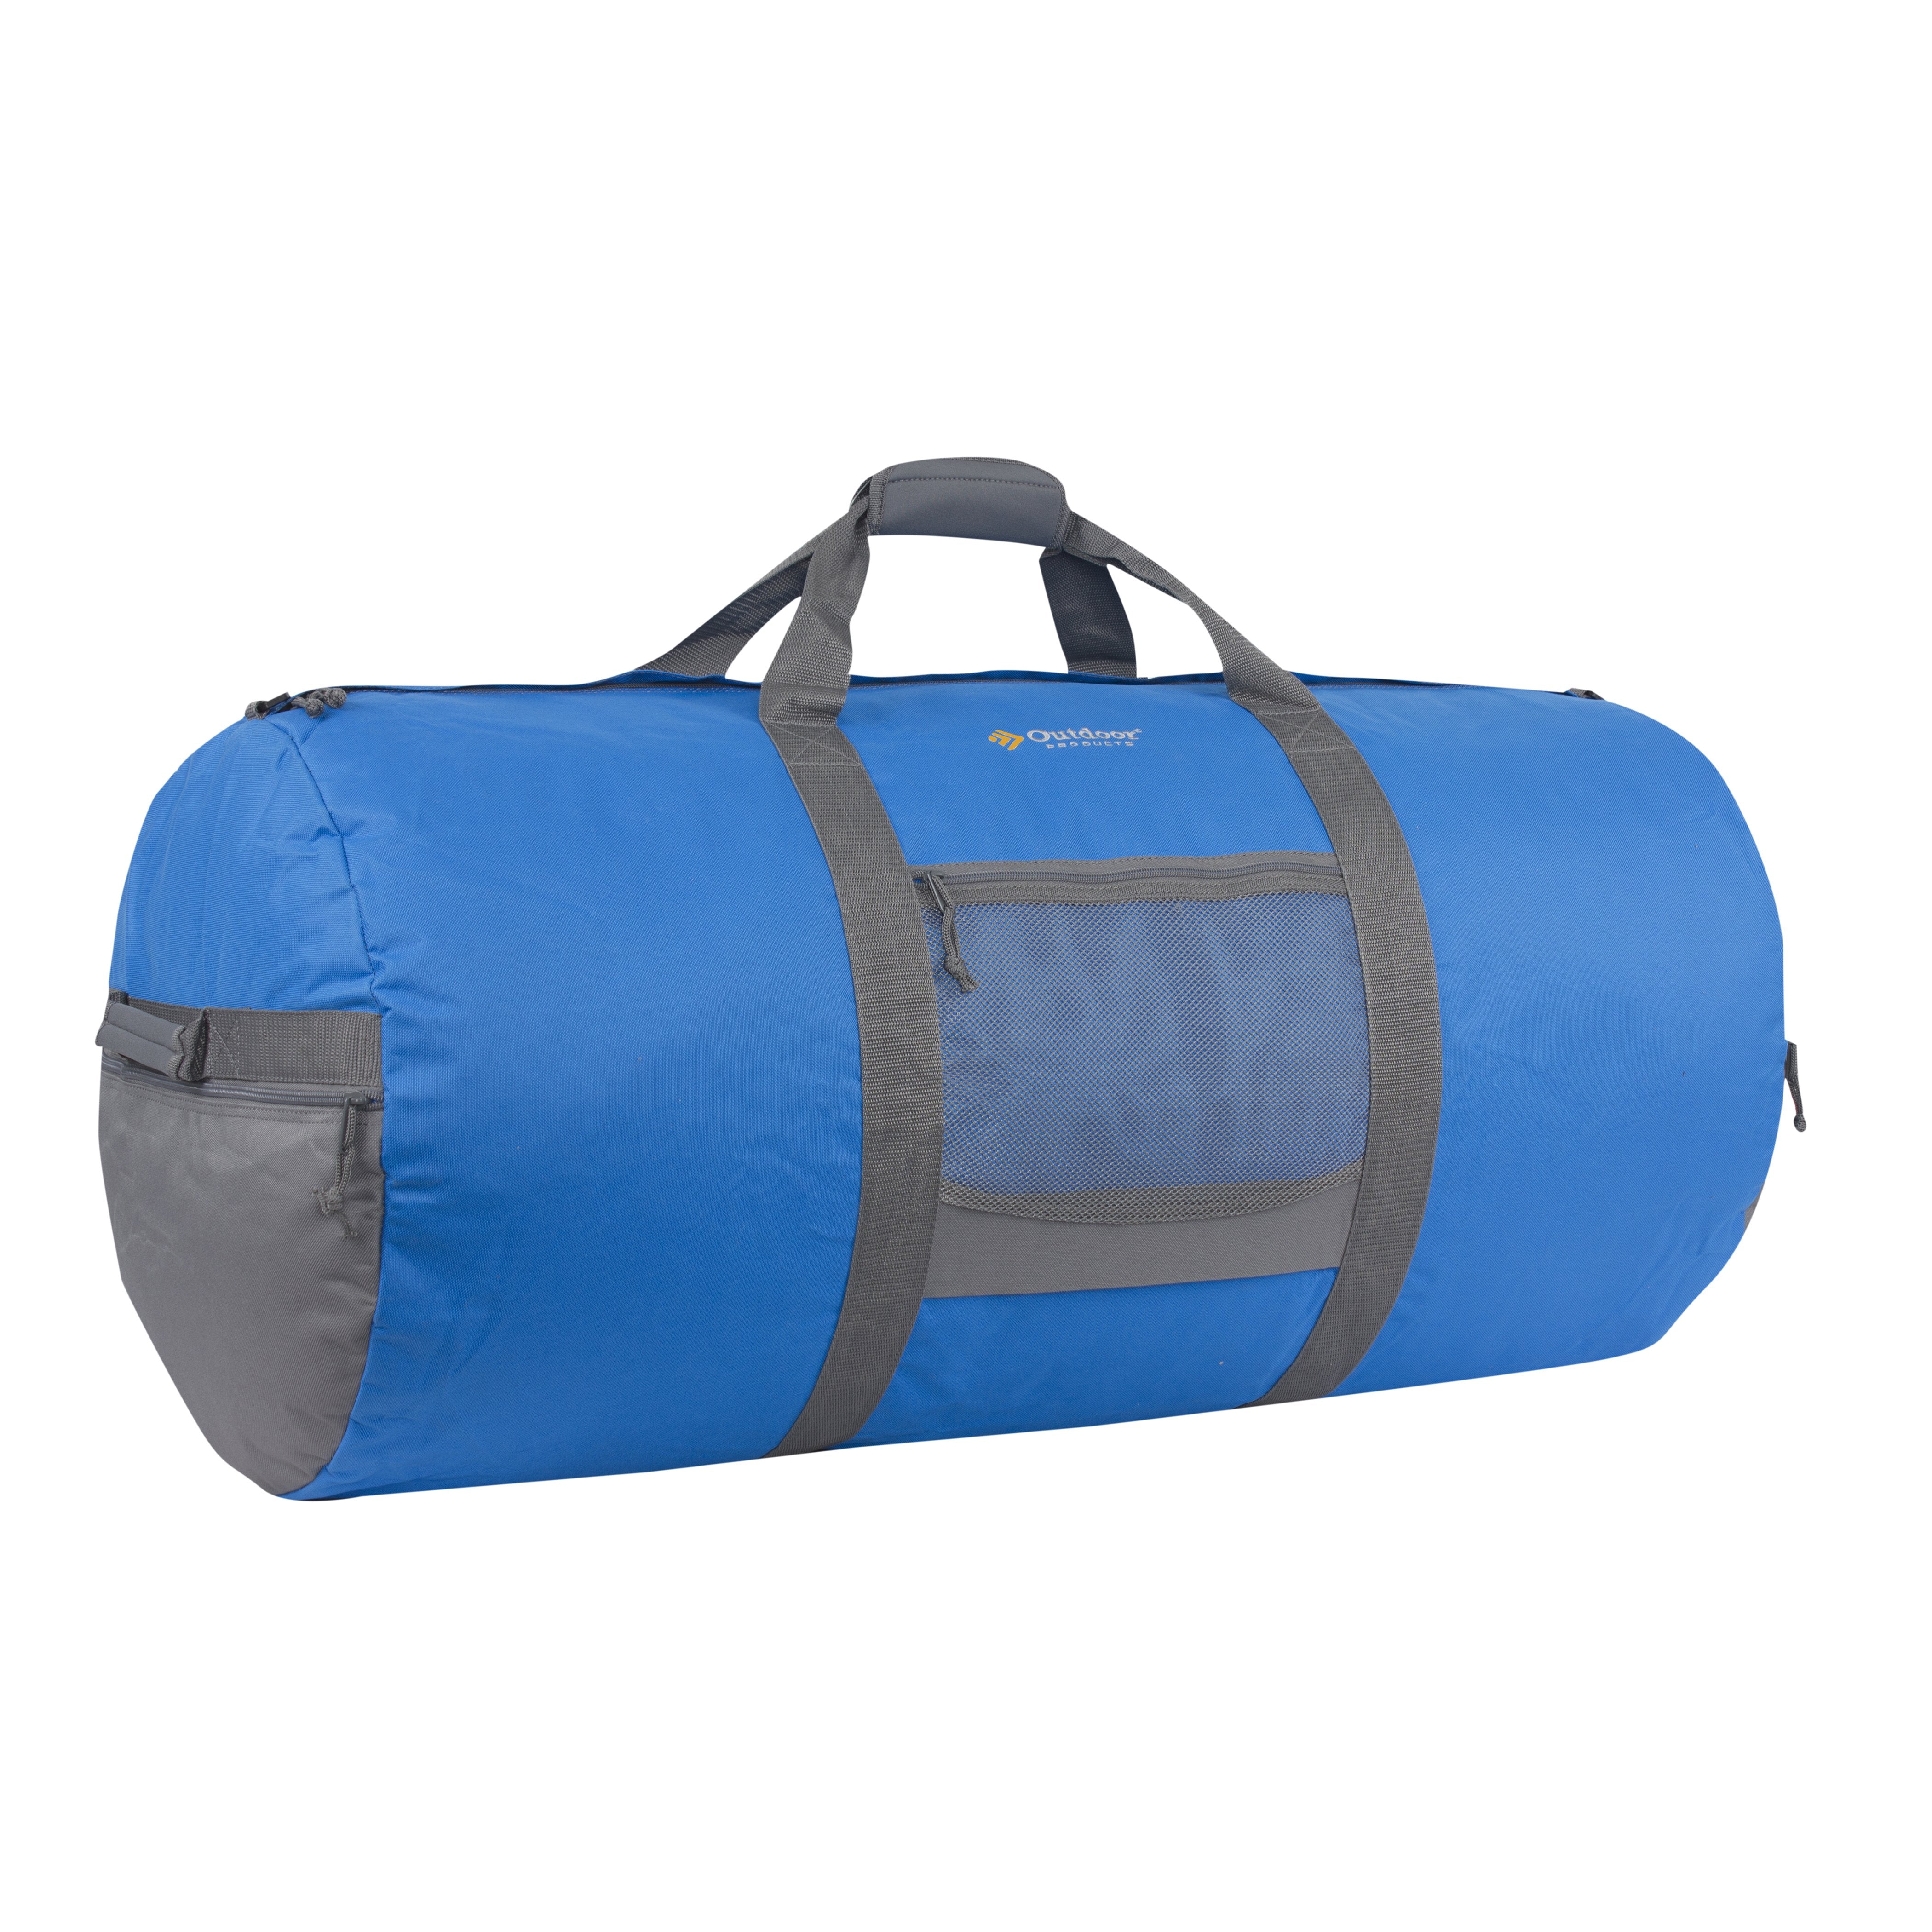 Water Gear 52350 Water Gear Mesh Bag-Blue 24 inchx30 inch, Size: Large